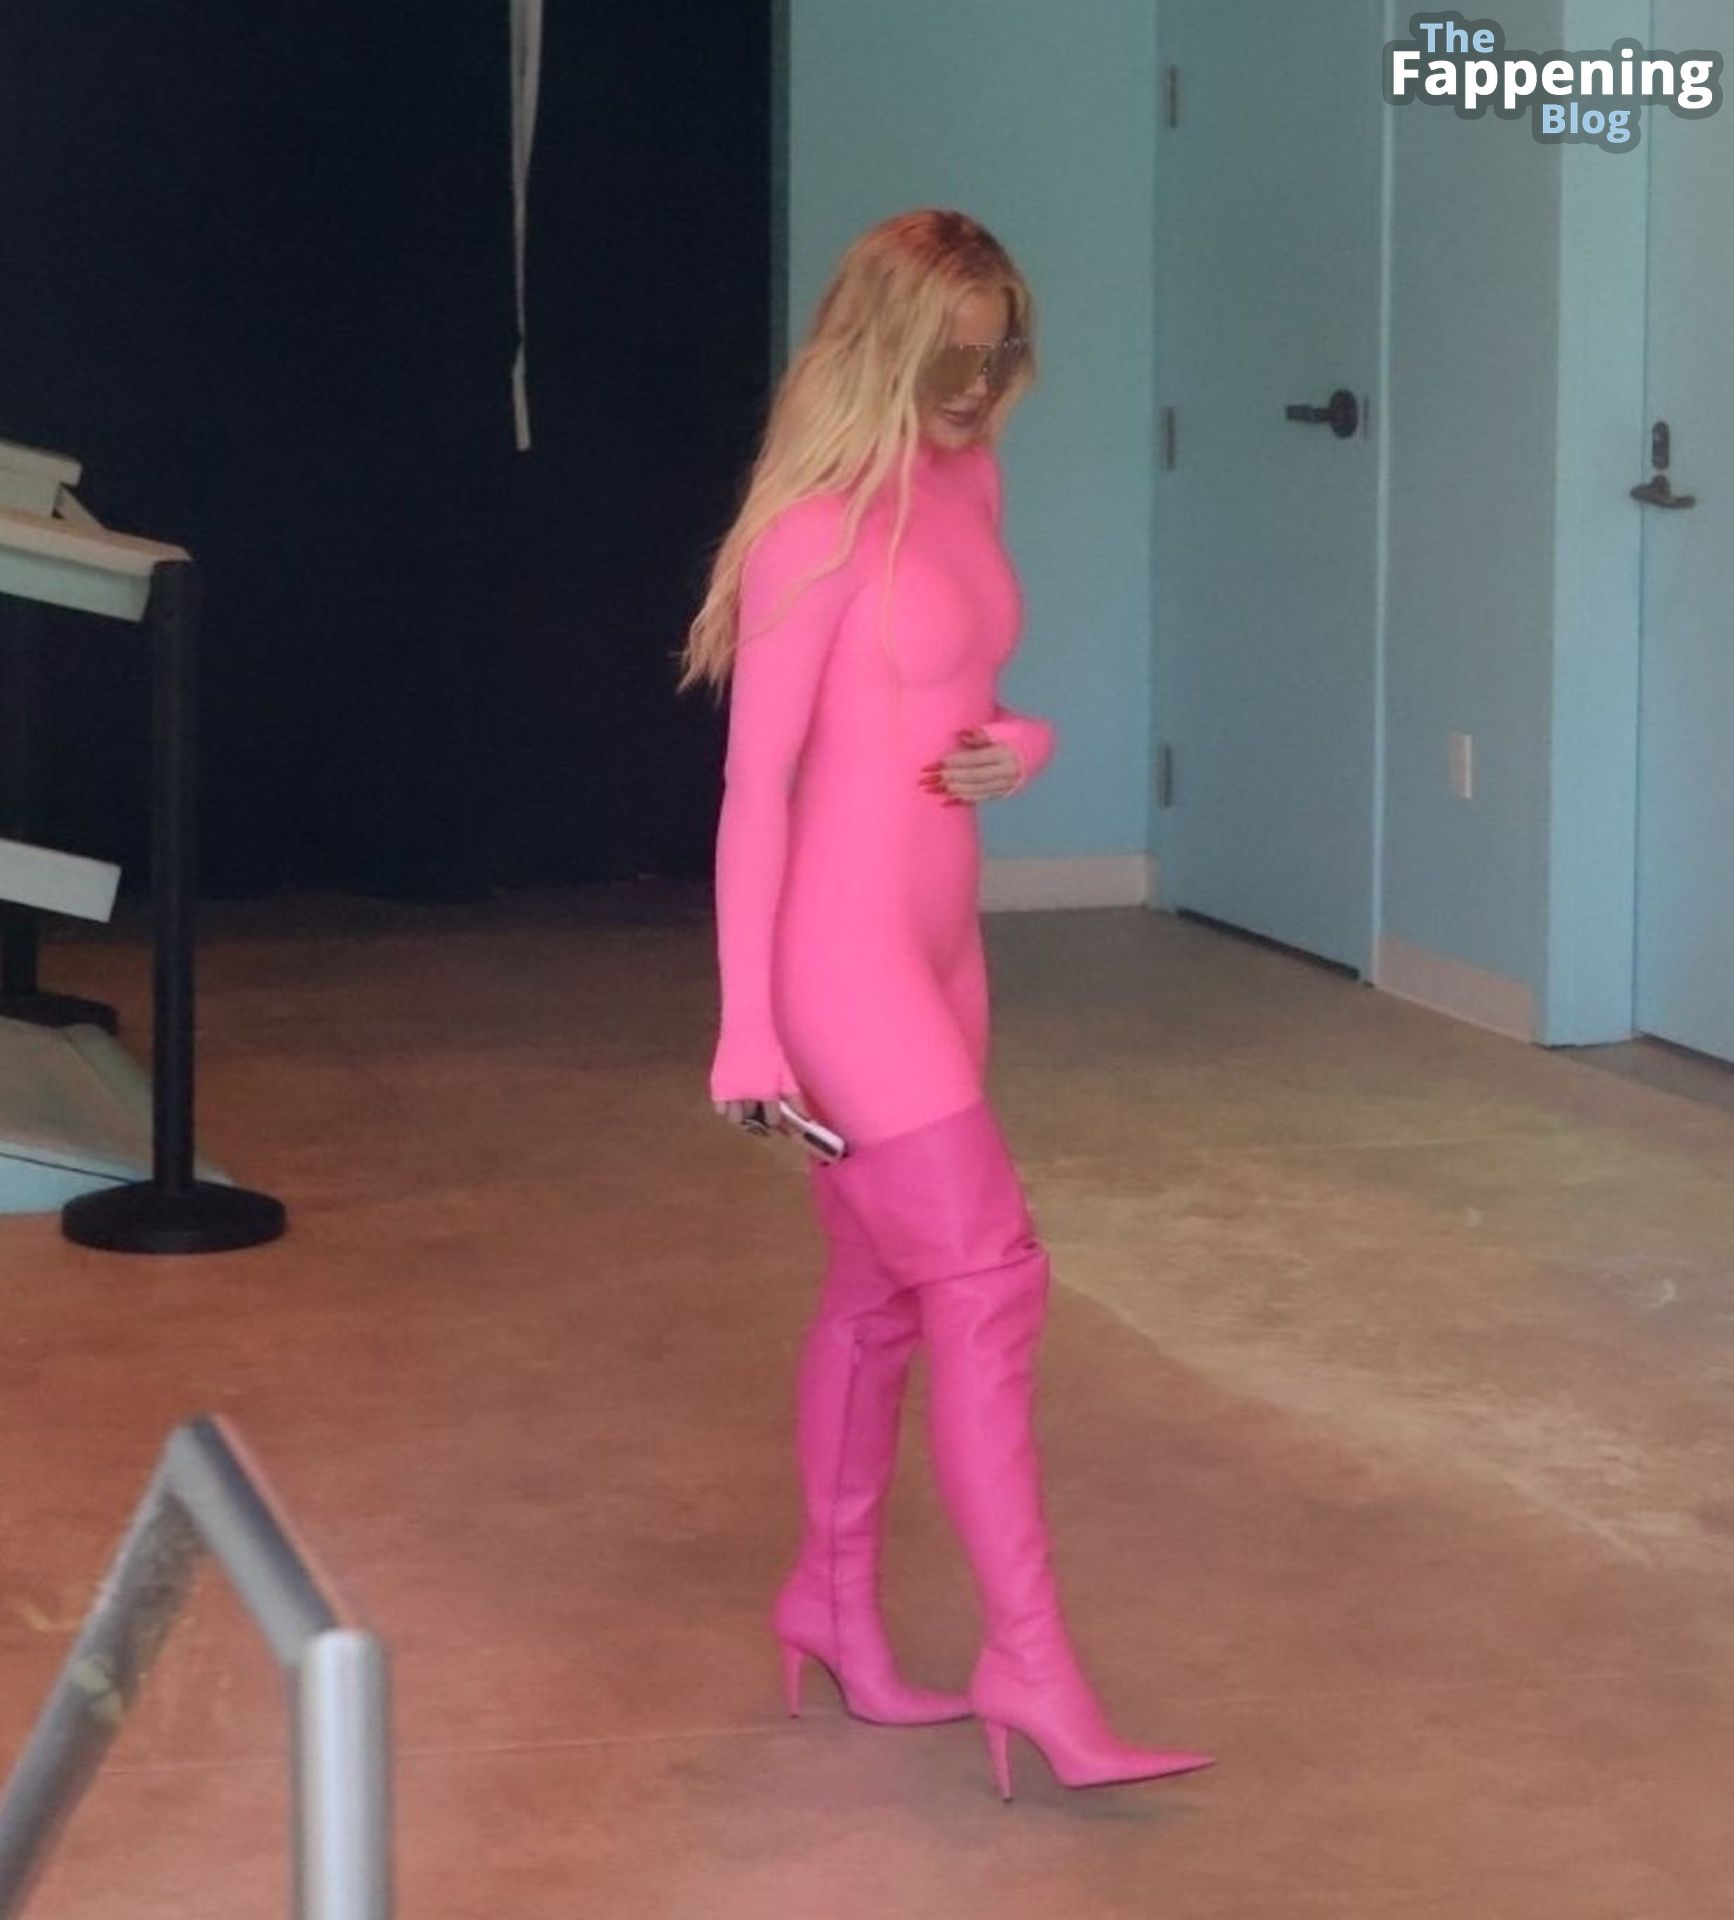 Khloe Kardashian Looks Hot in Pink (90 Photos)